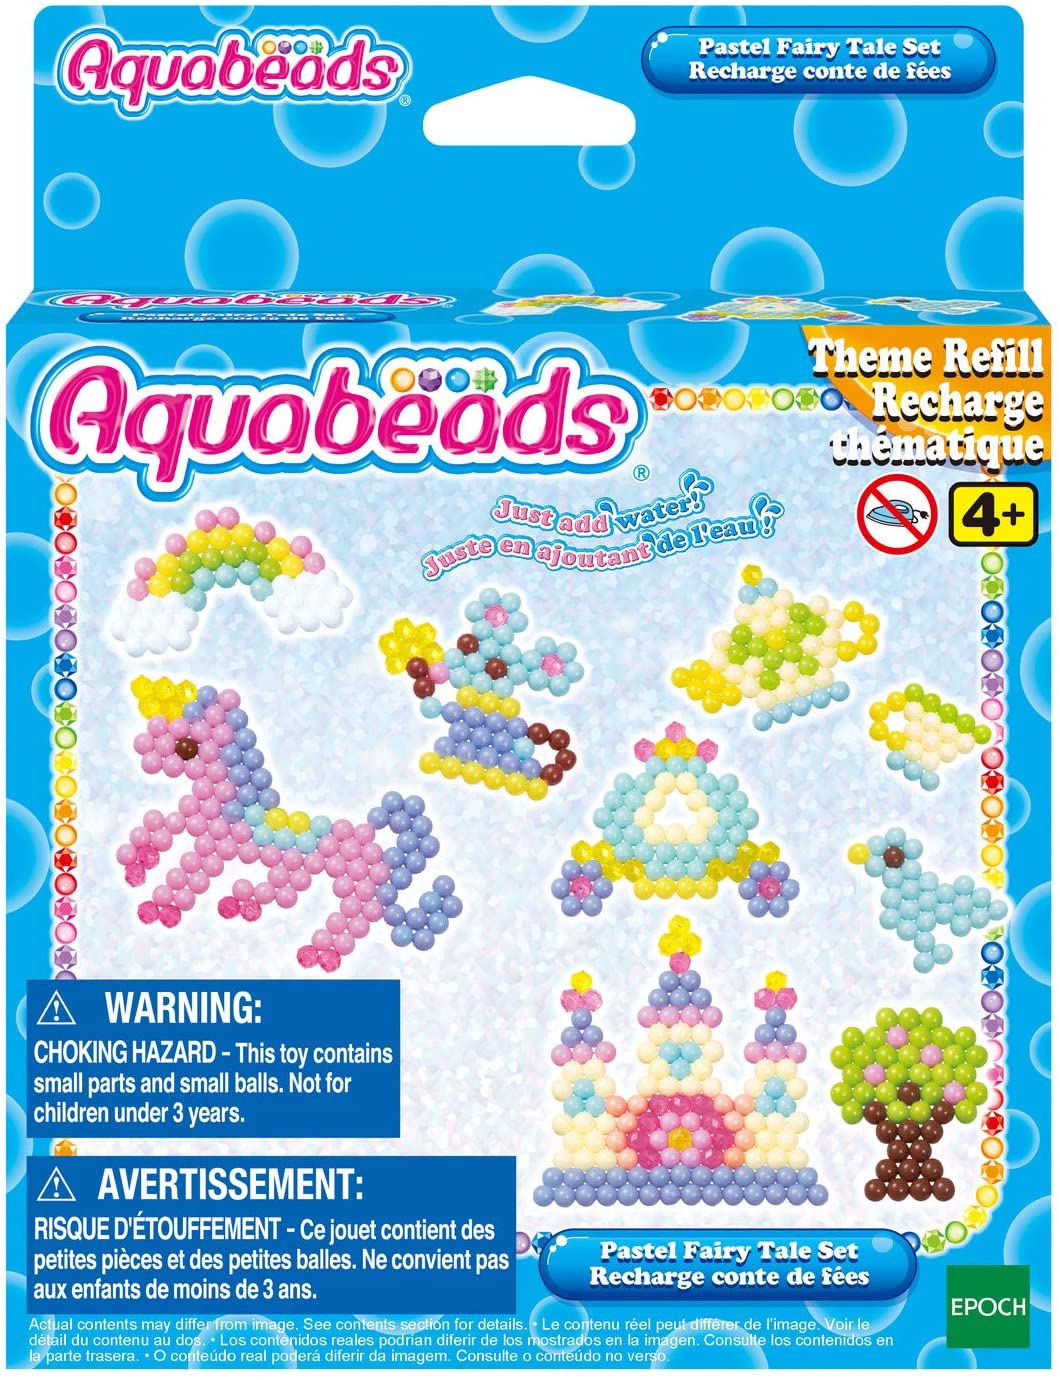 Aquabeads Pastel Fairy Tale Set